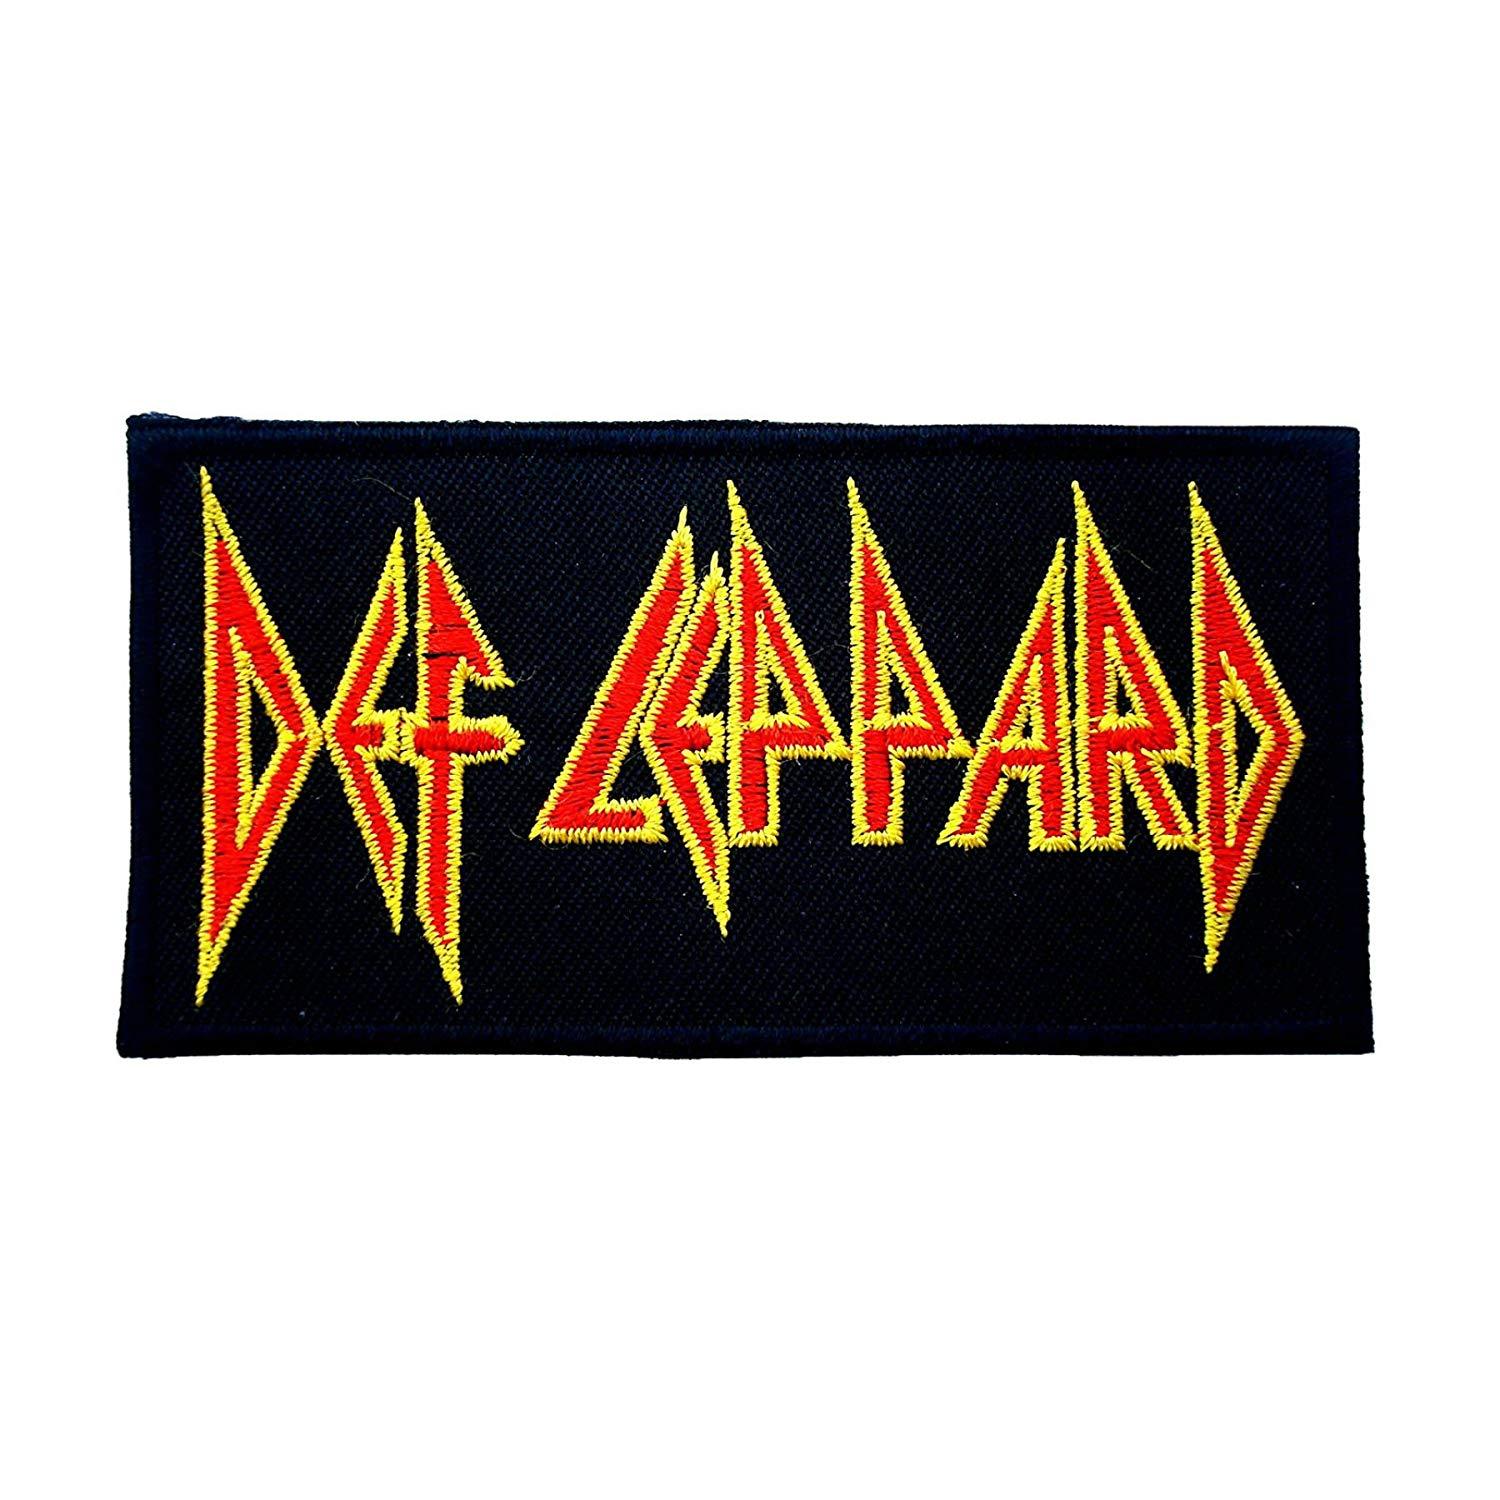 Def Leppard Band Logo - Amazon.com: Patch 4